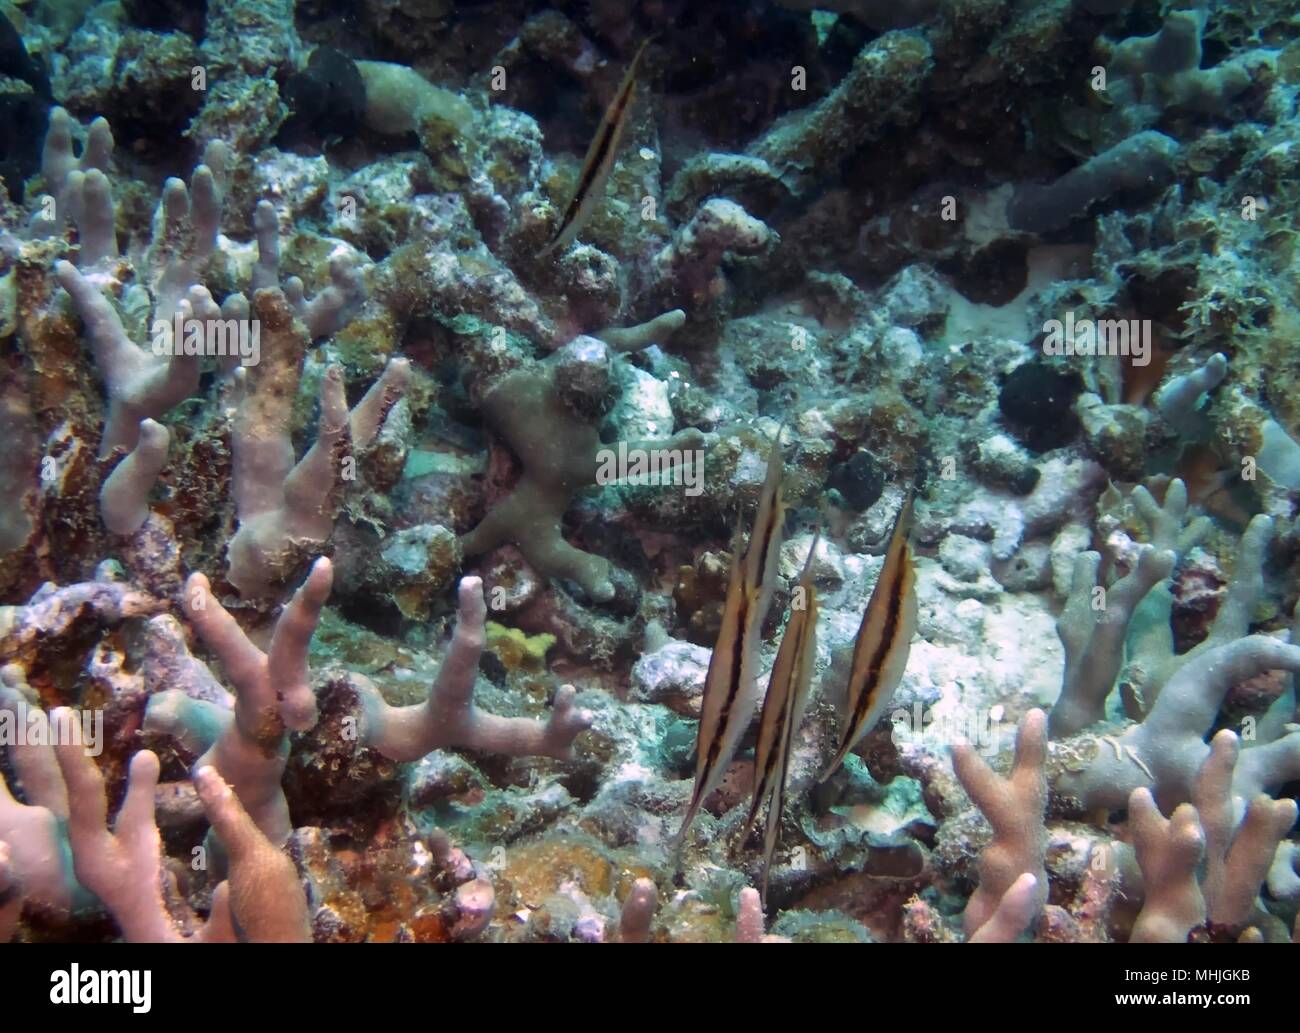 Razorfish (Aeoliscus strigatus) dancing along the coral in Truk Lagoon Stock Photo